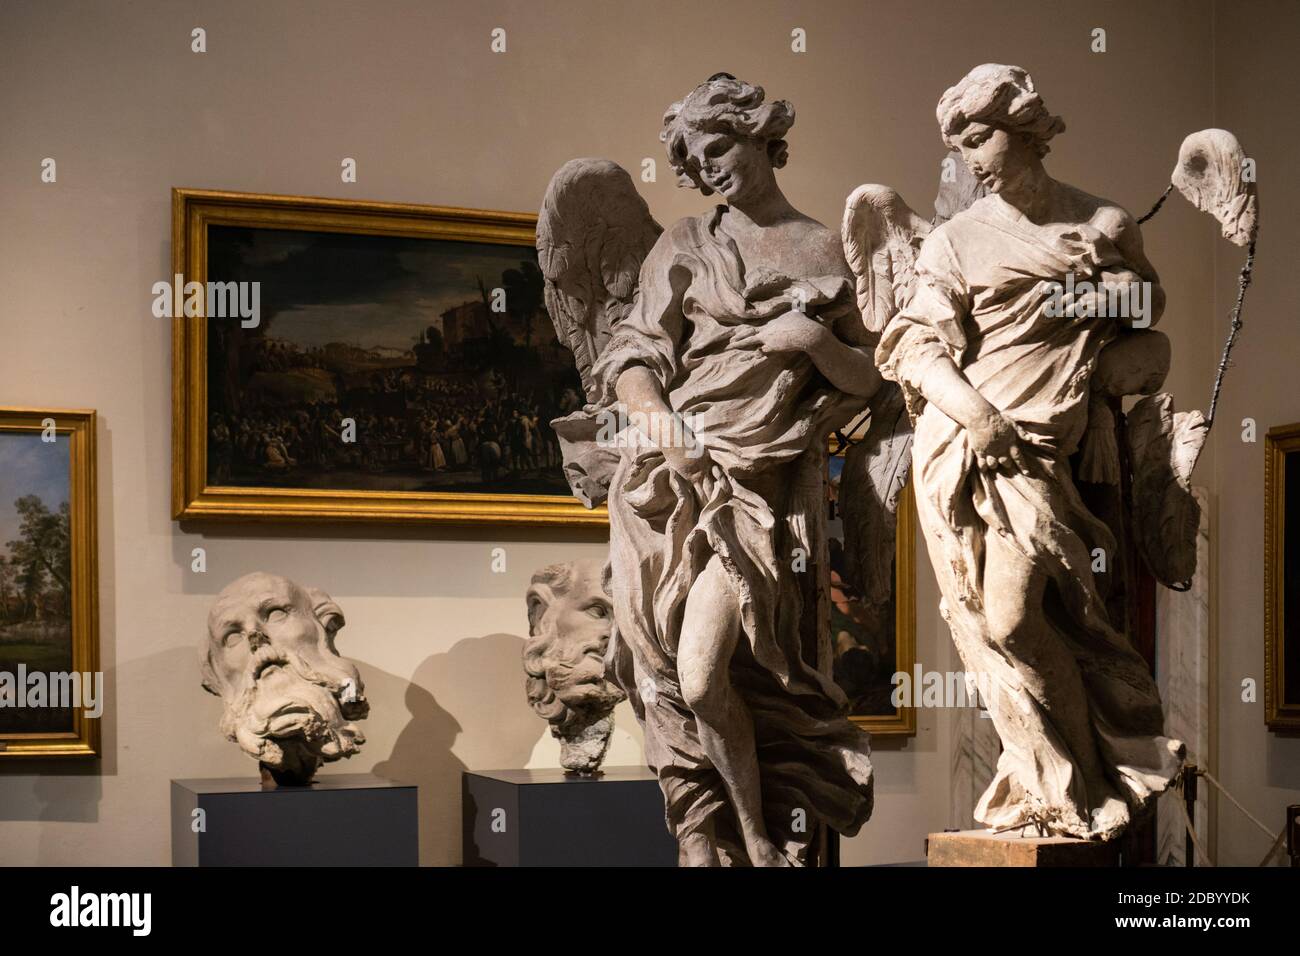 Vatican city, Rome - March 07, 2018: Bernini preparatory models of angels in Pinacoteca gallery in Vatican museums Stock Photo